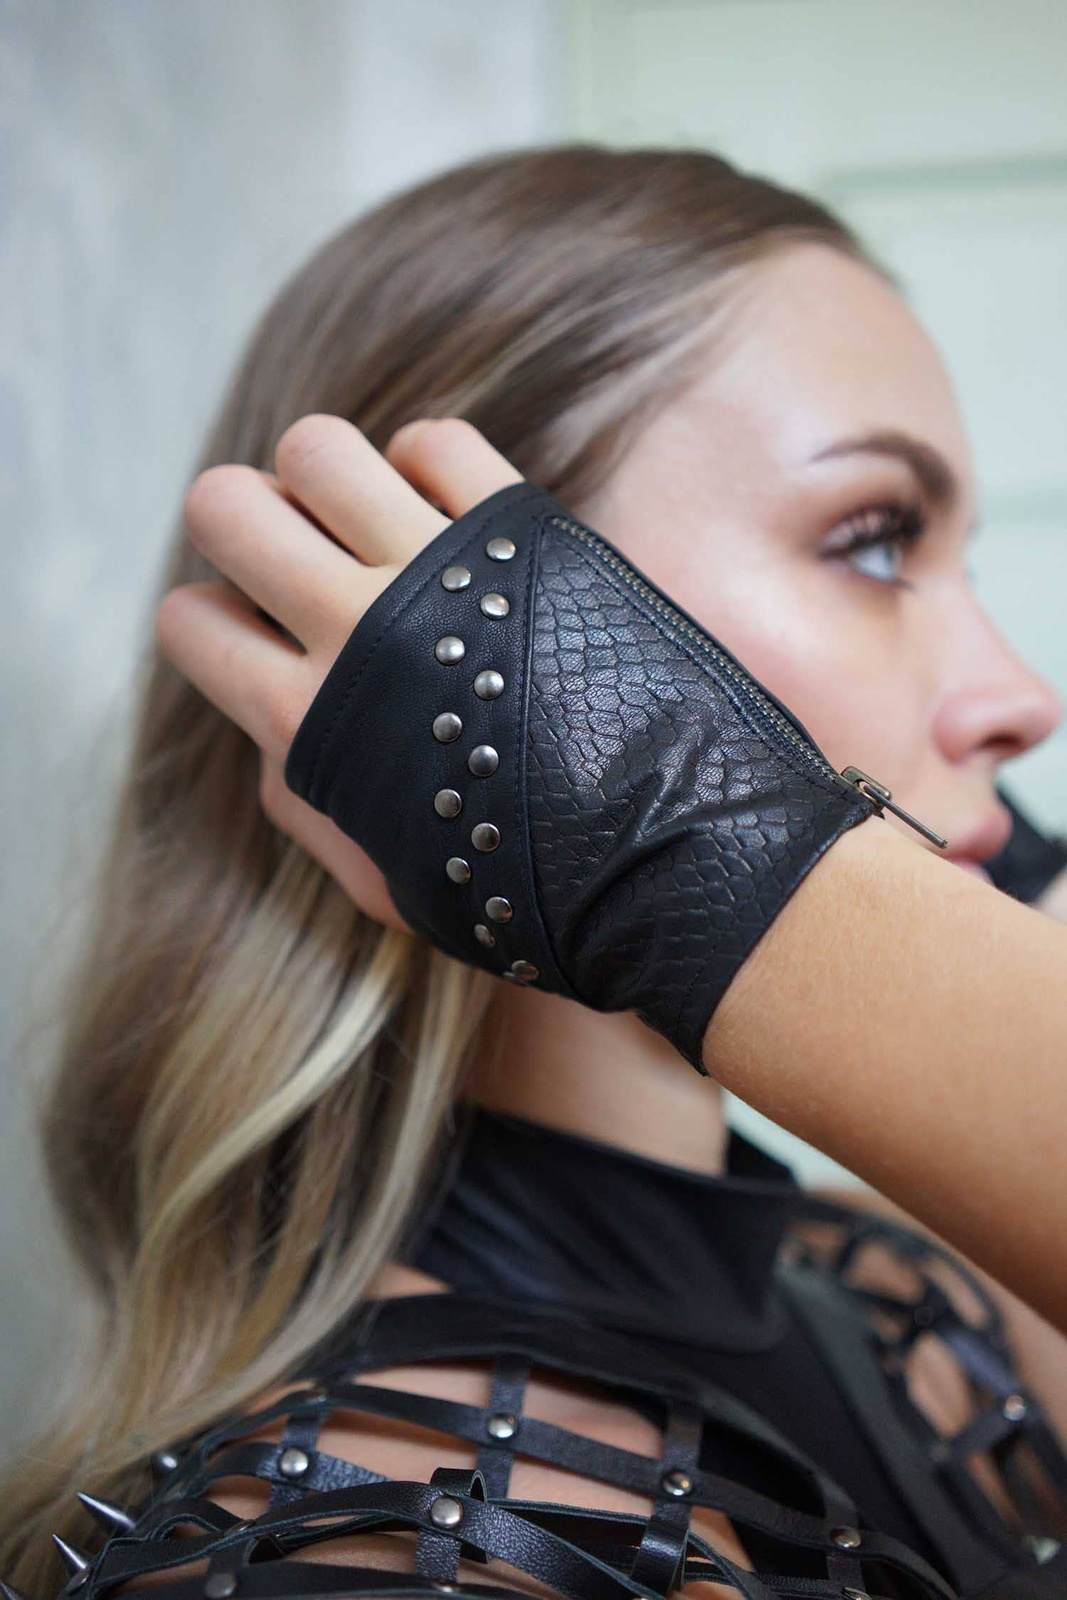 Anubis Fingerless Leather Gloves from Love Khaos Festival Clothing Brand